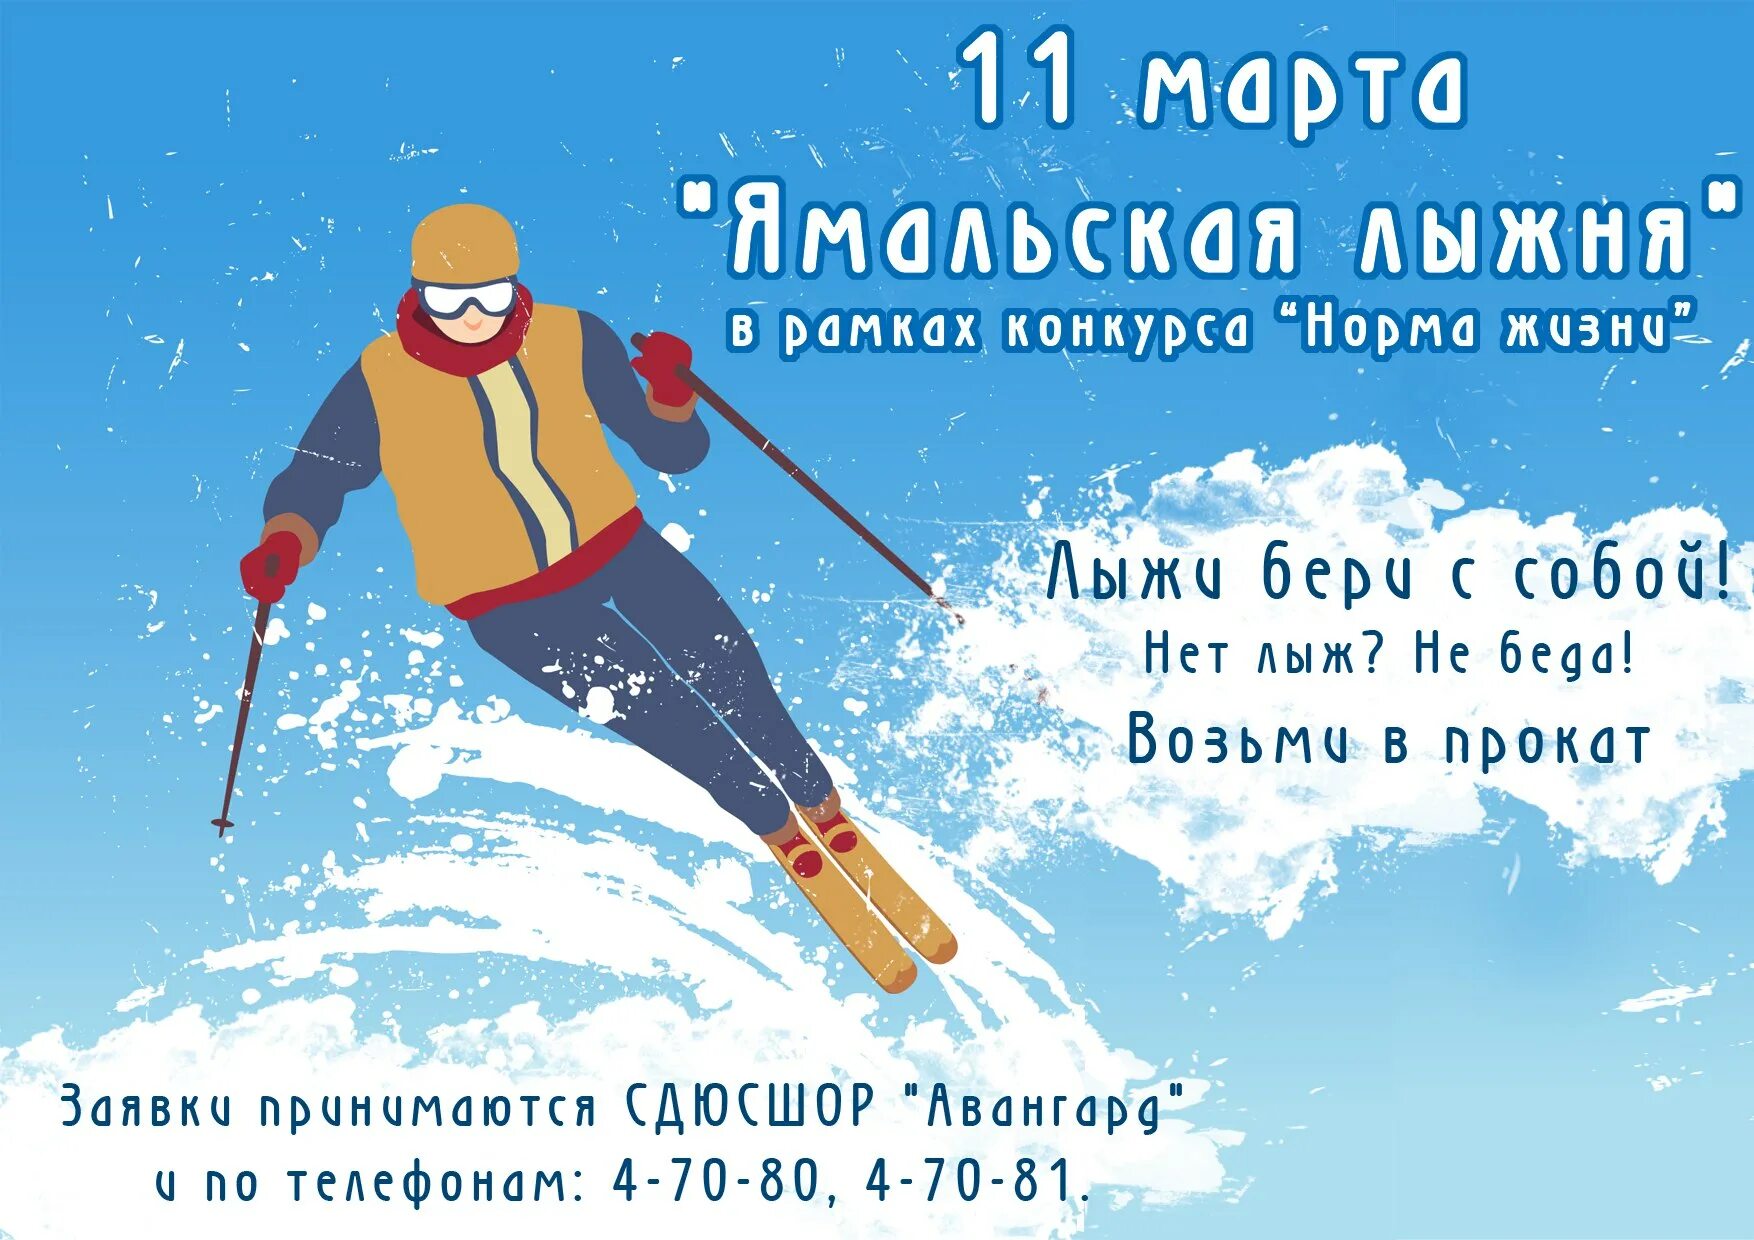 Ski 3 формы. Плакат Лыжня. Все на лыжню плакат. Ямальская Лыжня. Лыжня афиша фон.